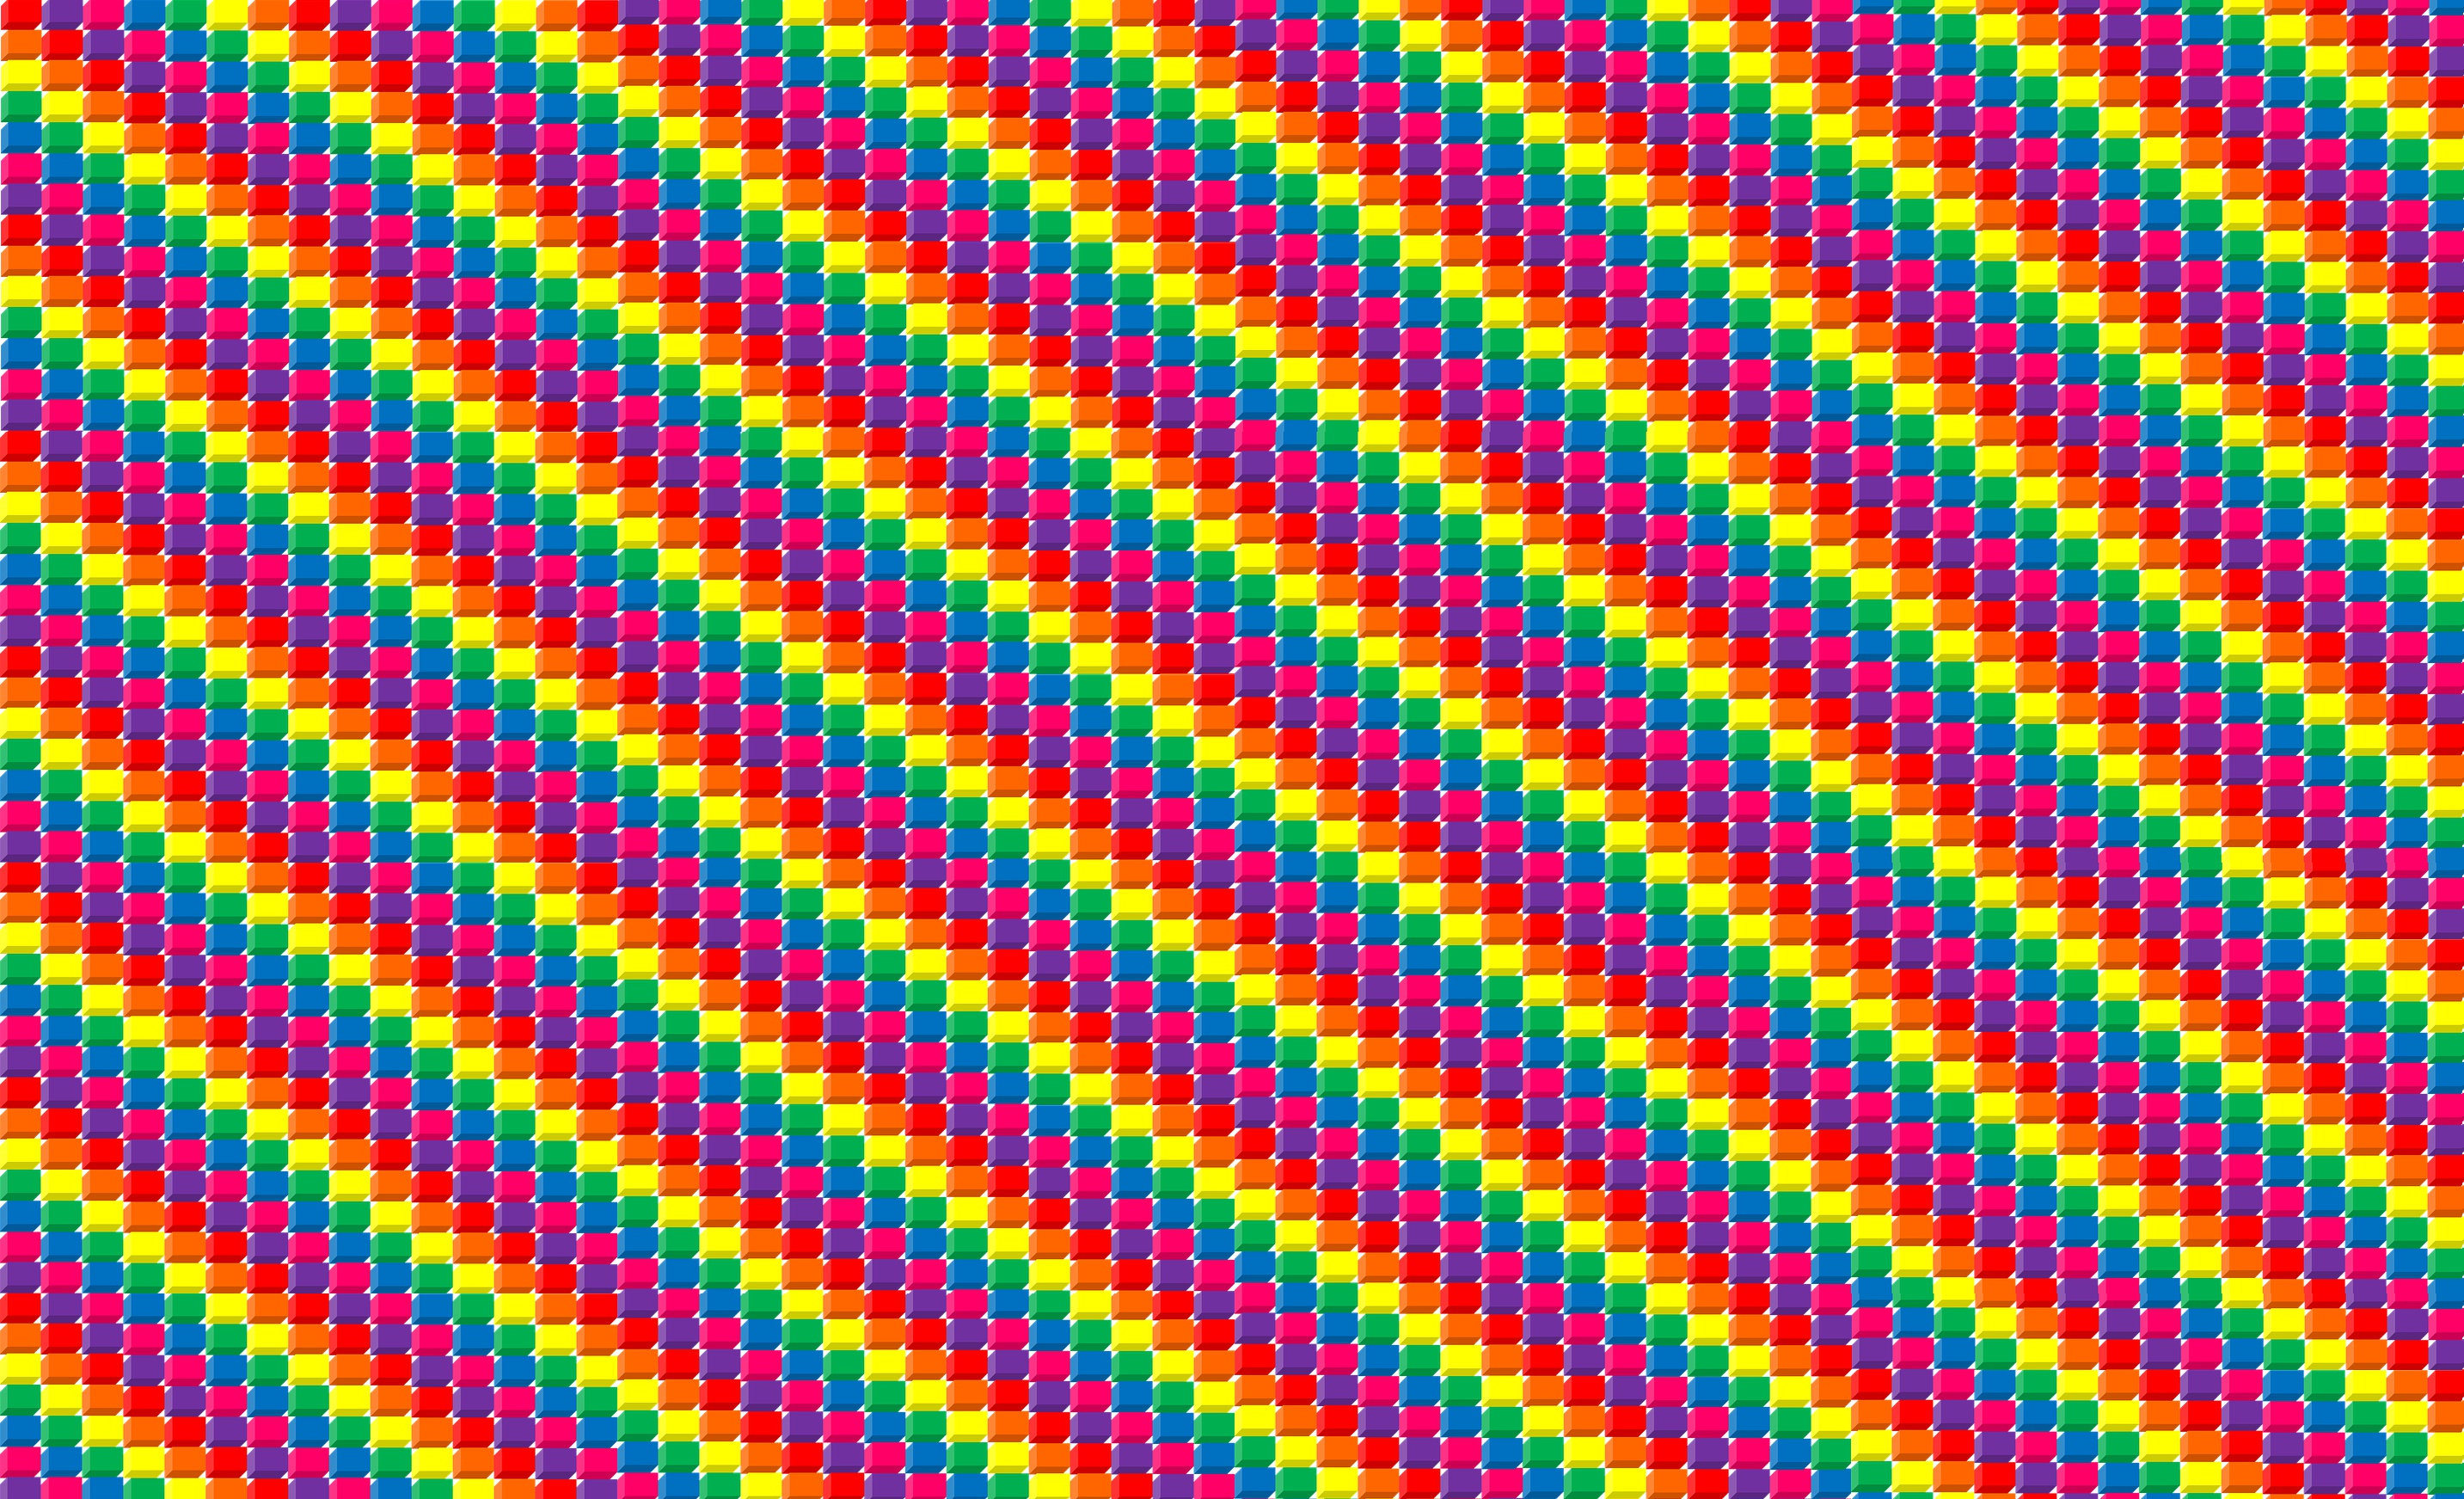 Artistic Colorful Colors Digital Art Pattern Rainbow Square 2866x1743